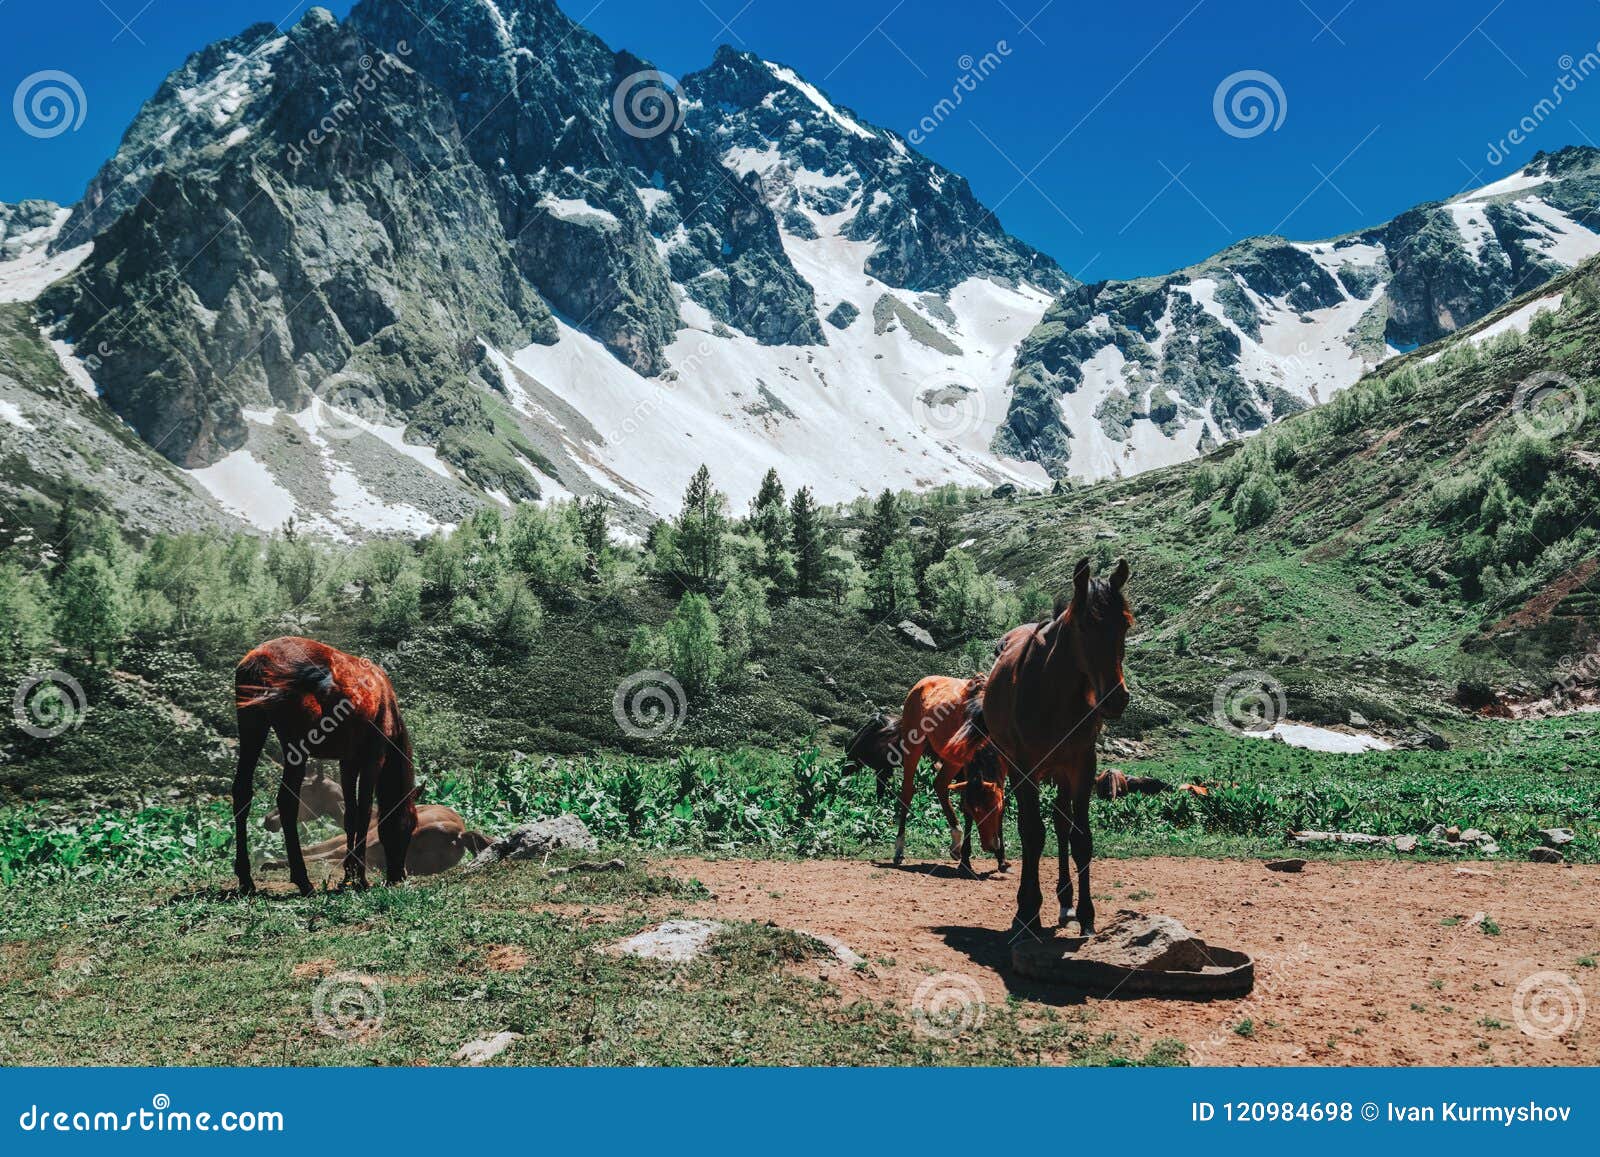 Beautiful Nature Caucasus Mountains Landscape Stock Photo - Image of ...